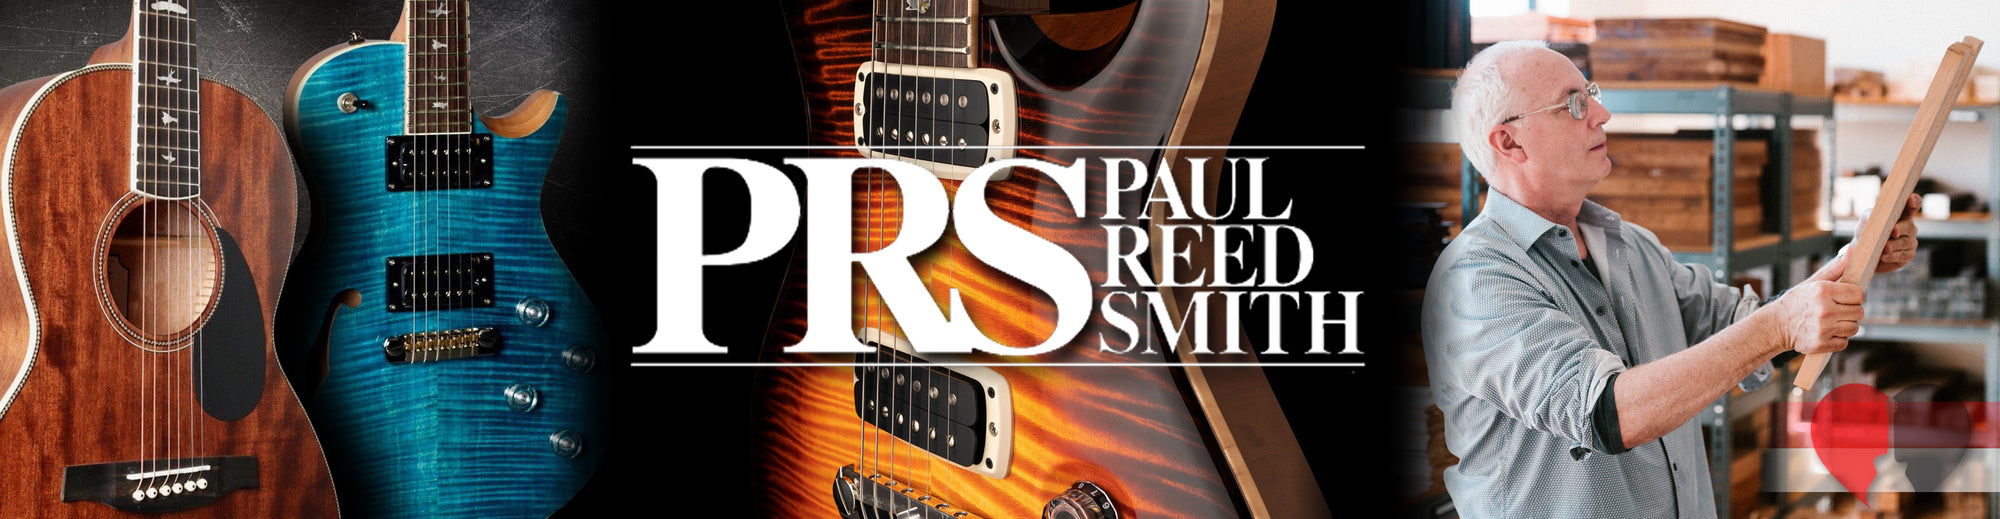 Paul Reed Smith Guitars